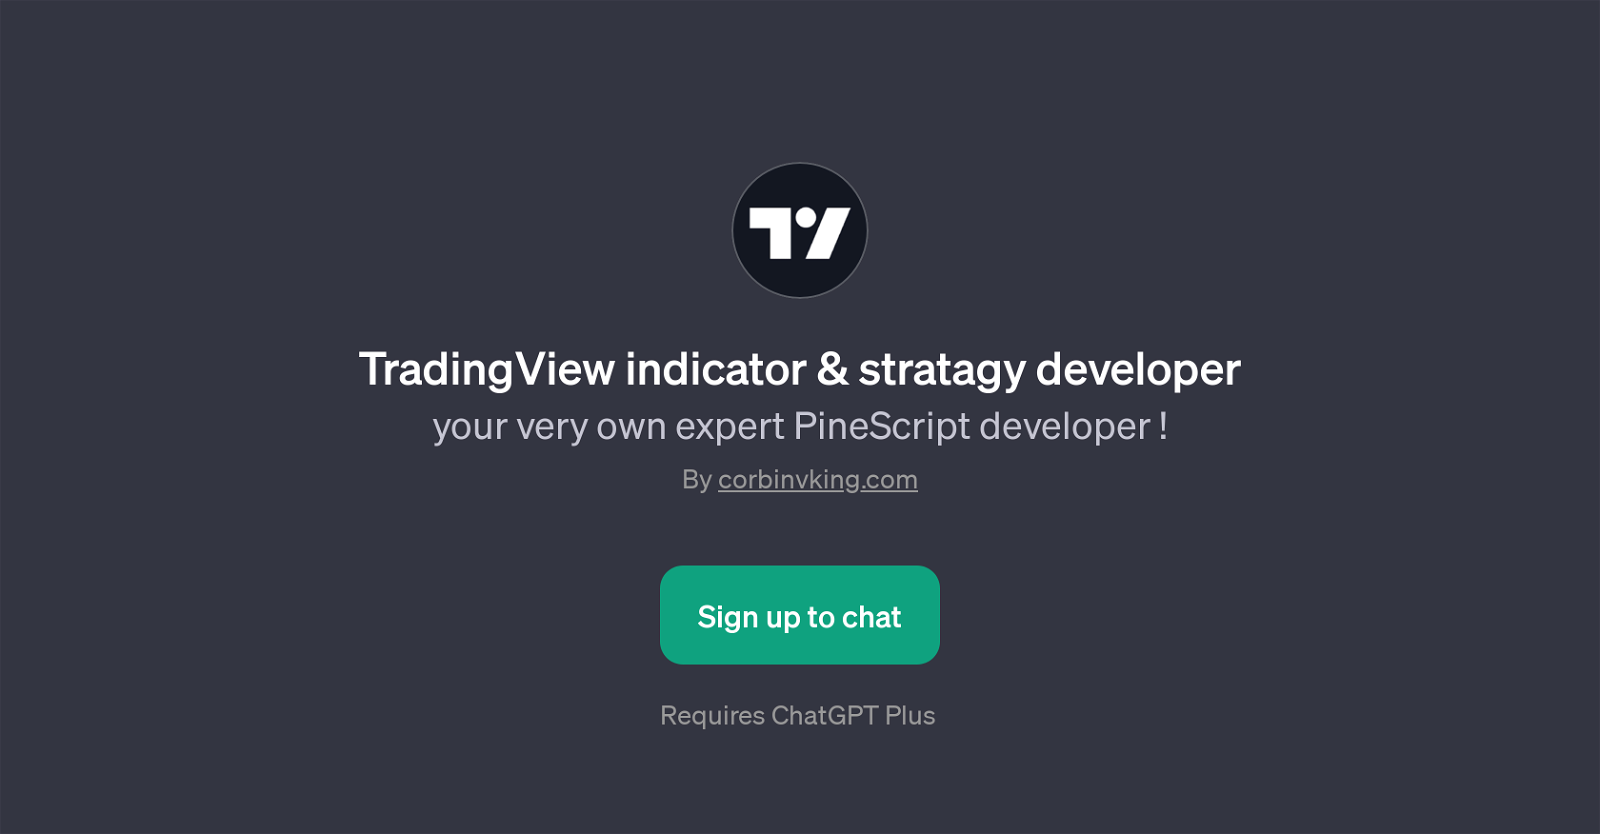 TradingView Indicator & Strategy Developer website